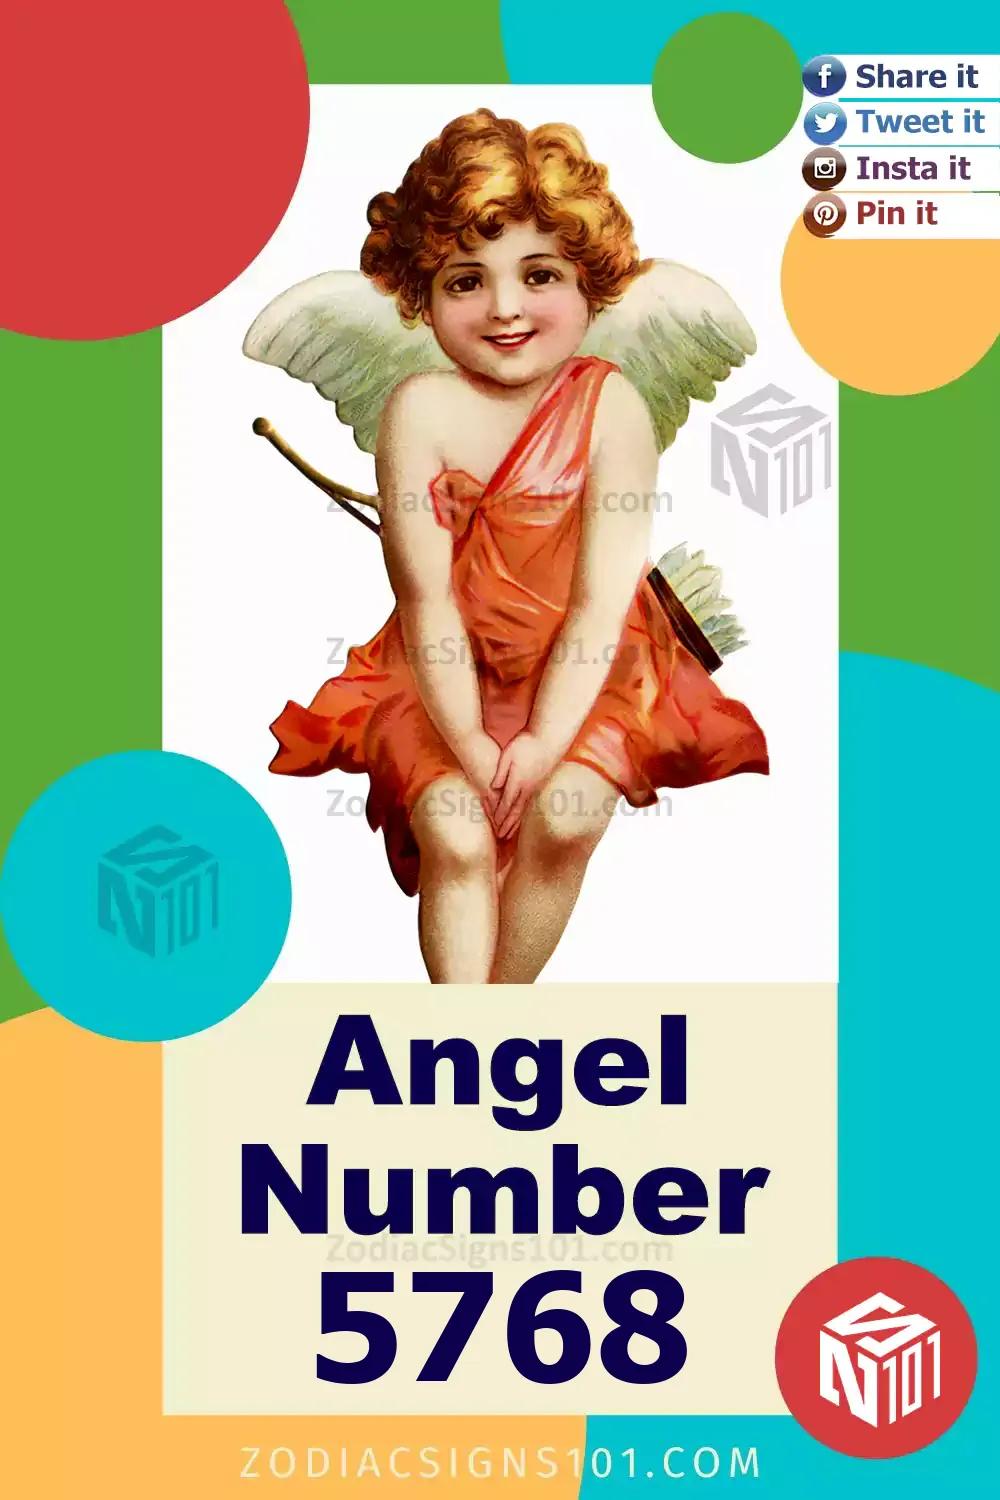 5768-Angel-Number-Meaning.jpg